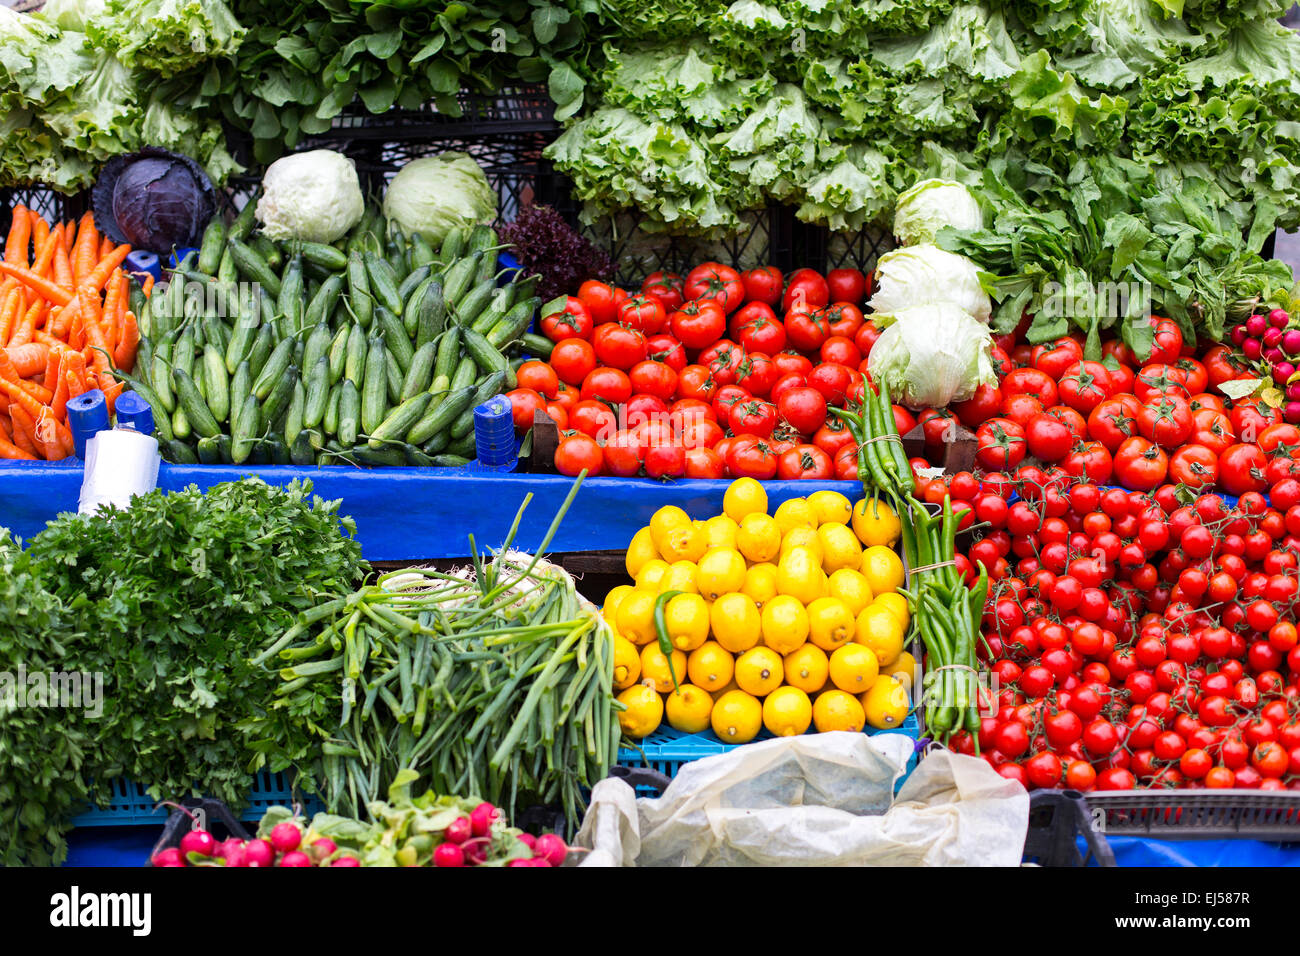 Sale of fresh vegetables on shelf Stock Photo